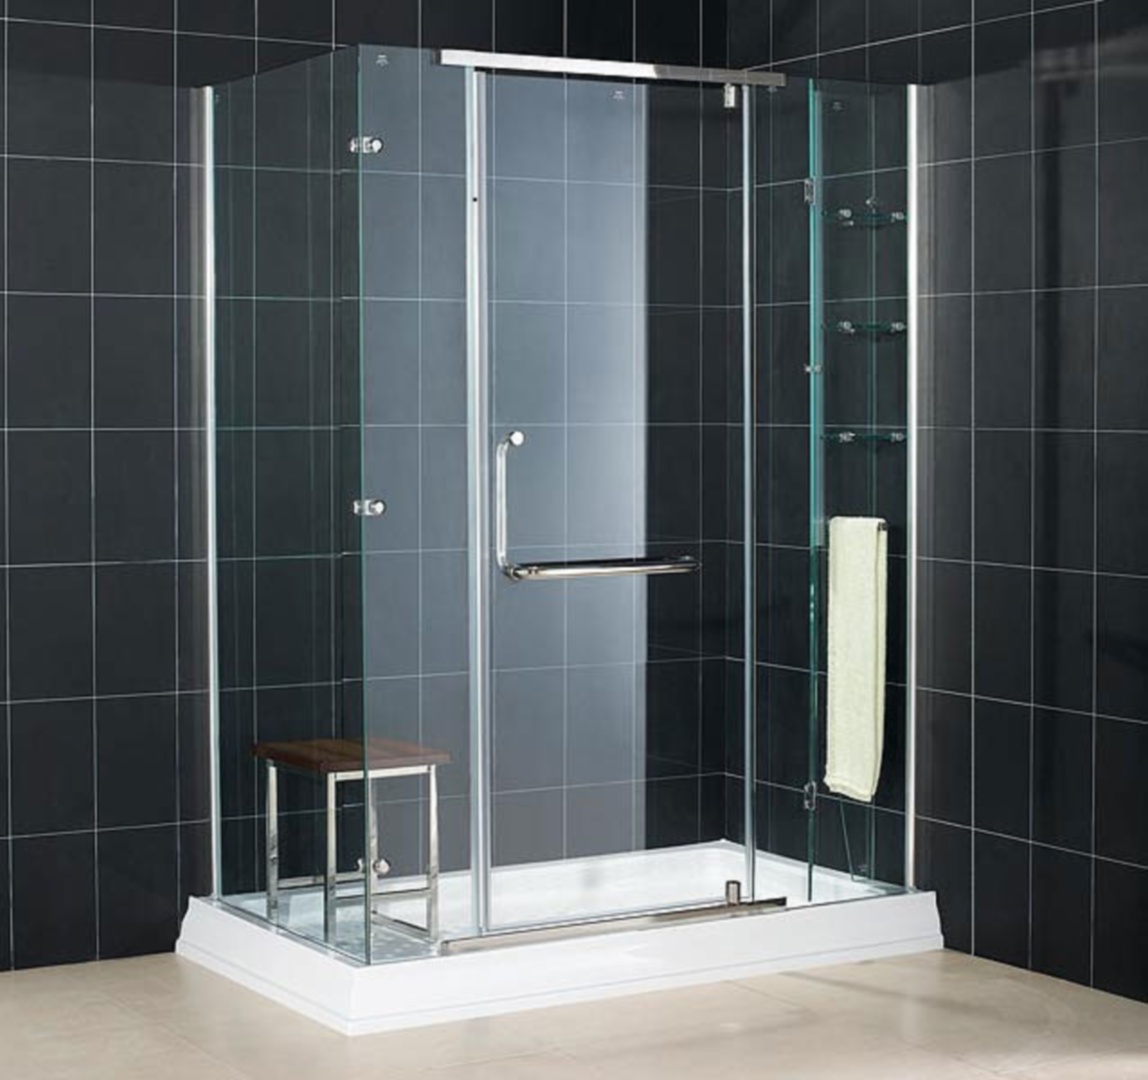 bathroom-napoli-modern-italian-bathroom-black-wall-tiles-square-see-through-shower-cabin-astonishing-italian-bathroom-interior-design